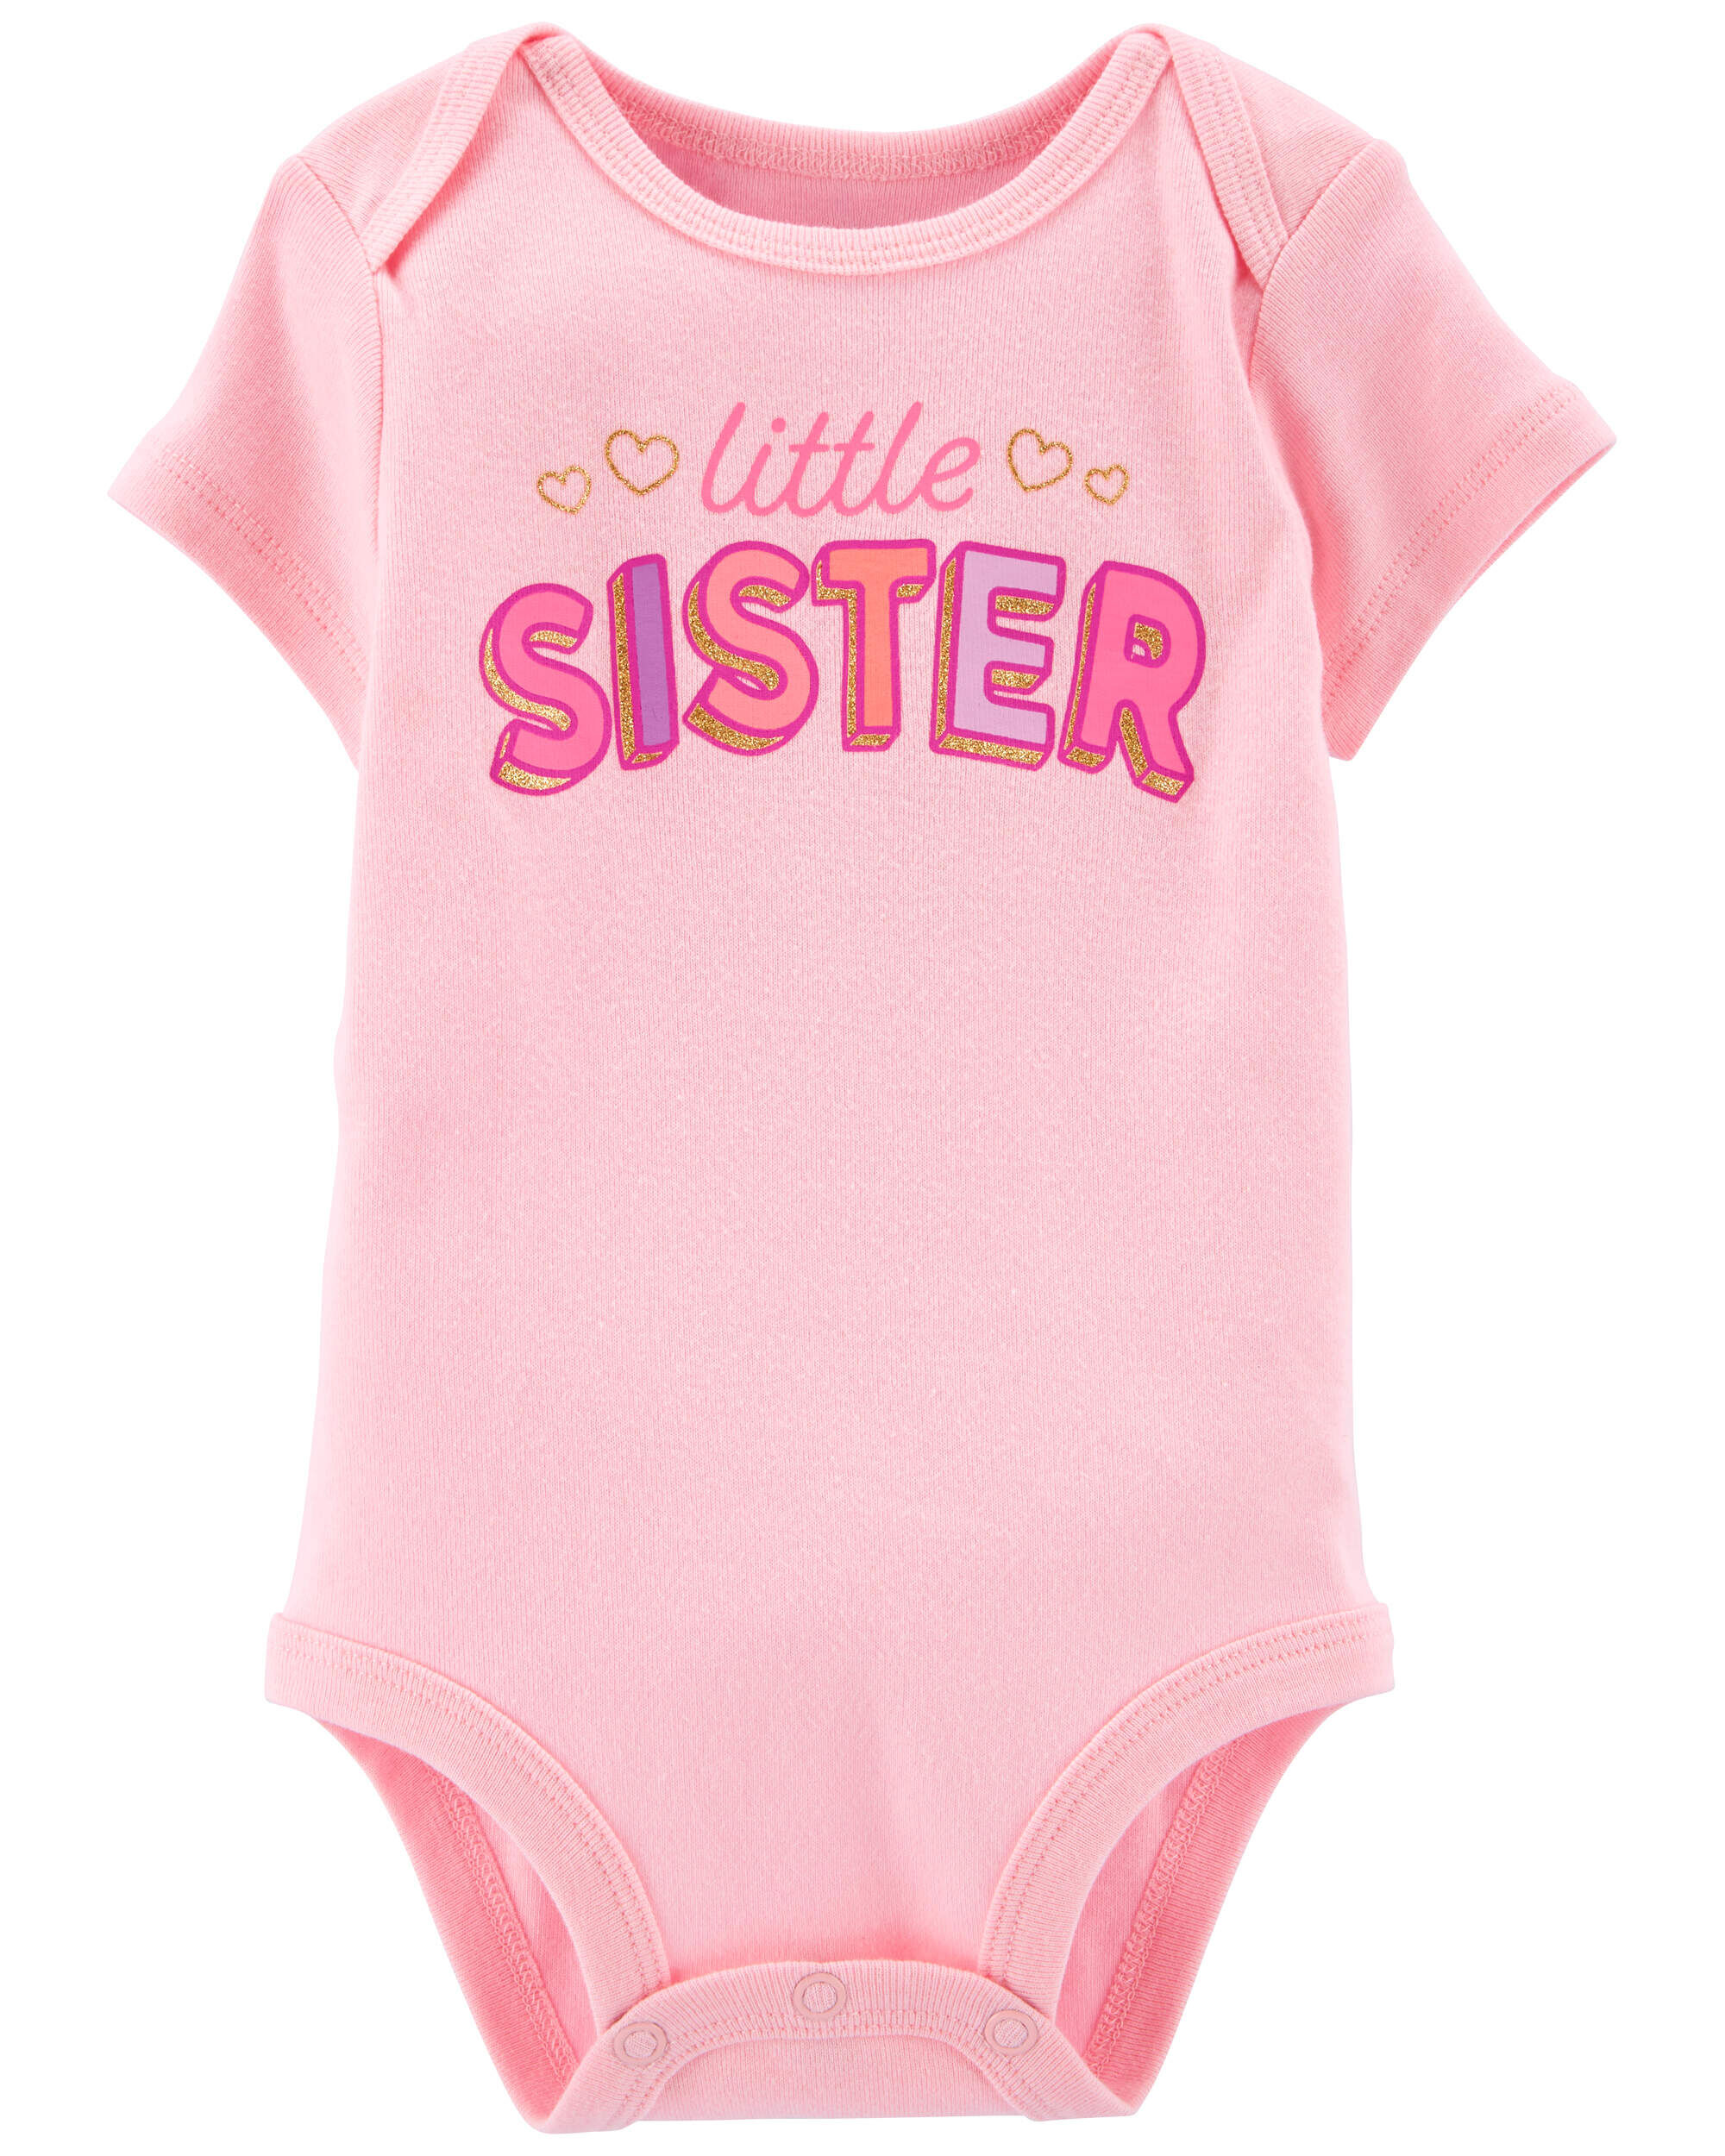 Carters Baby Little Sister Bodysuit